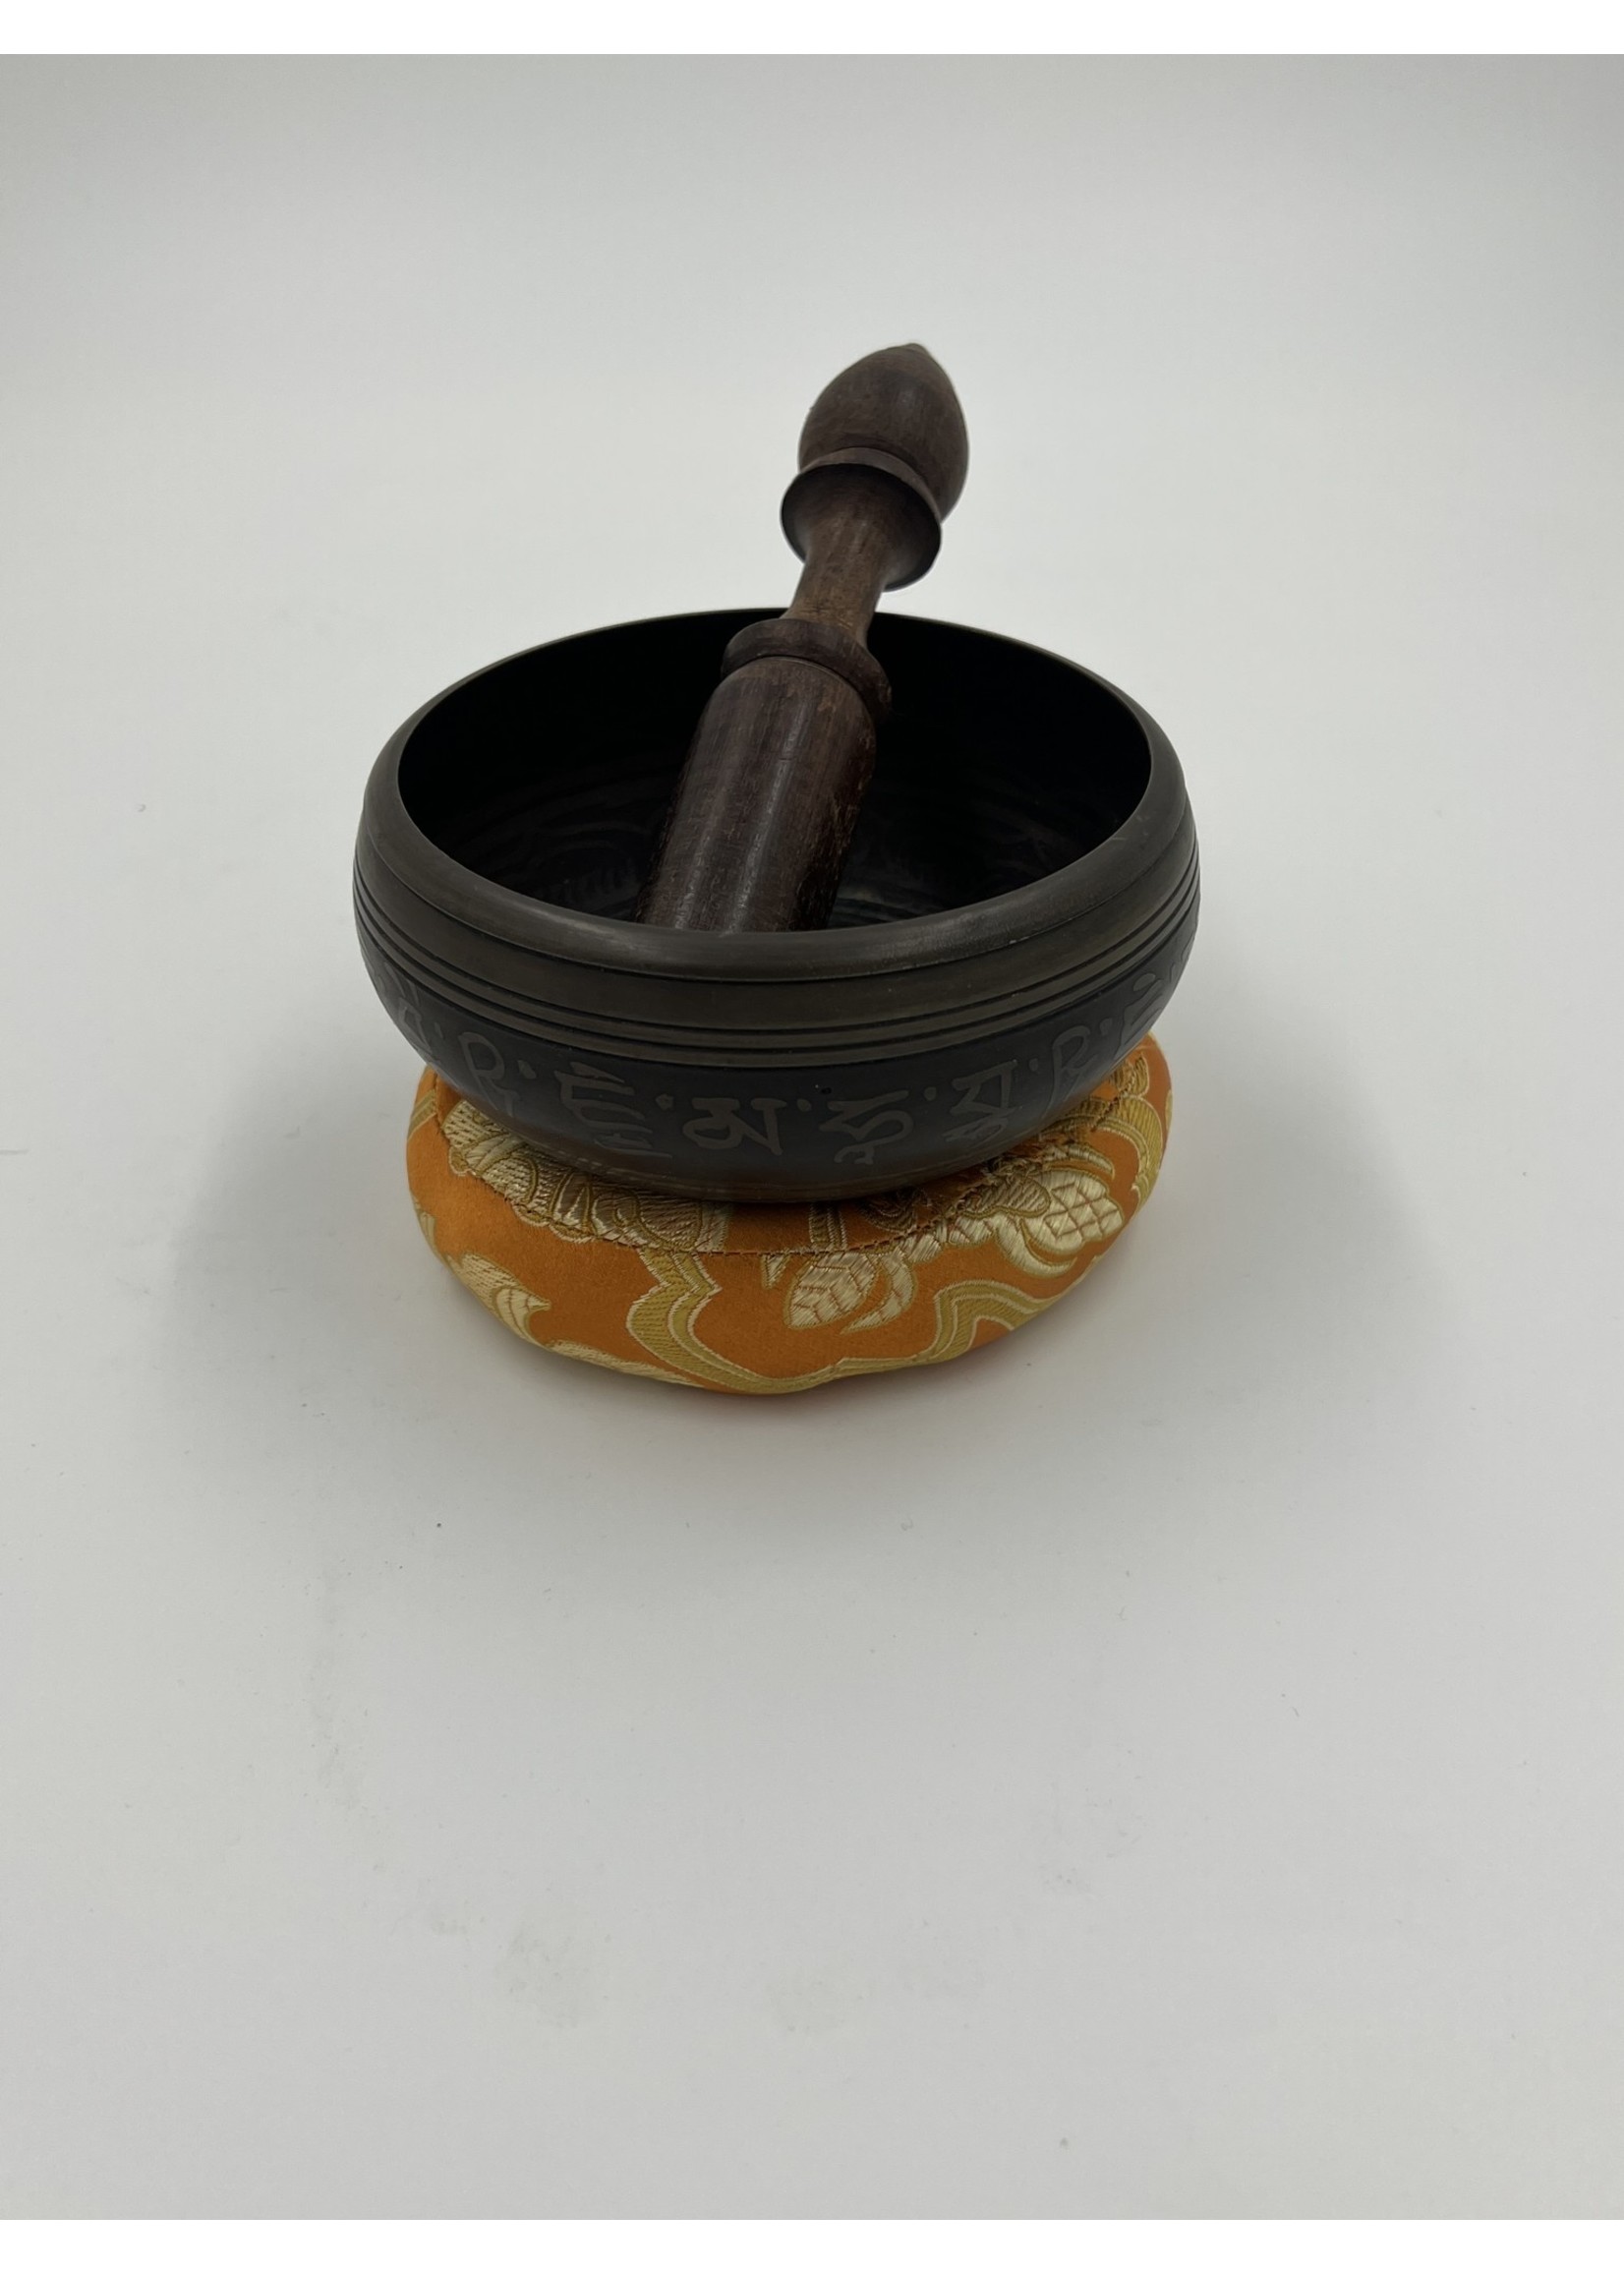 Other Things Himalayan Singing Bowl Buddha Design In Bowl